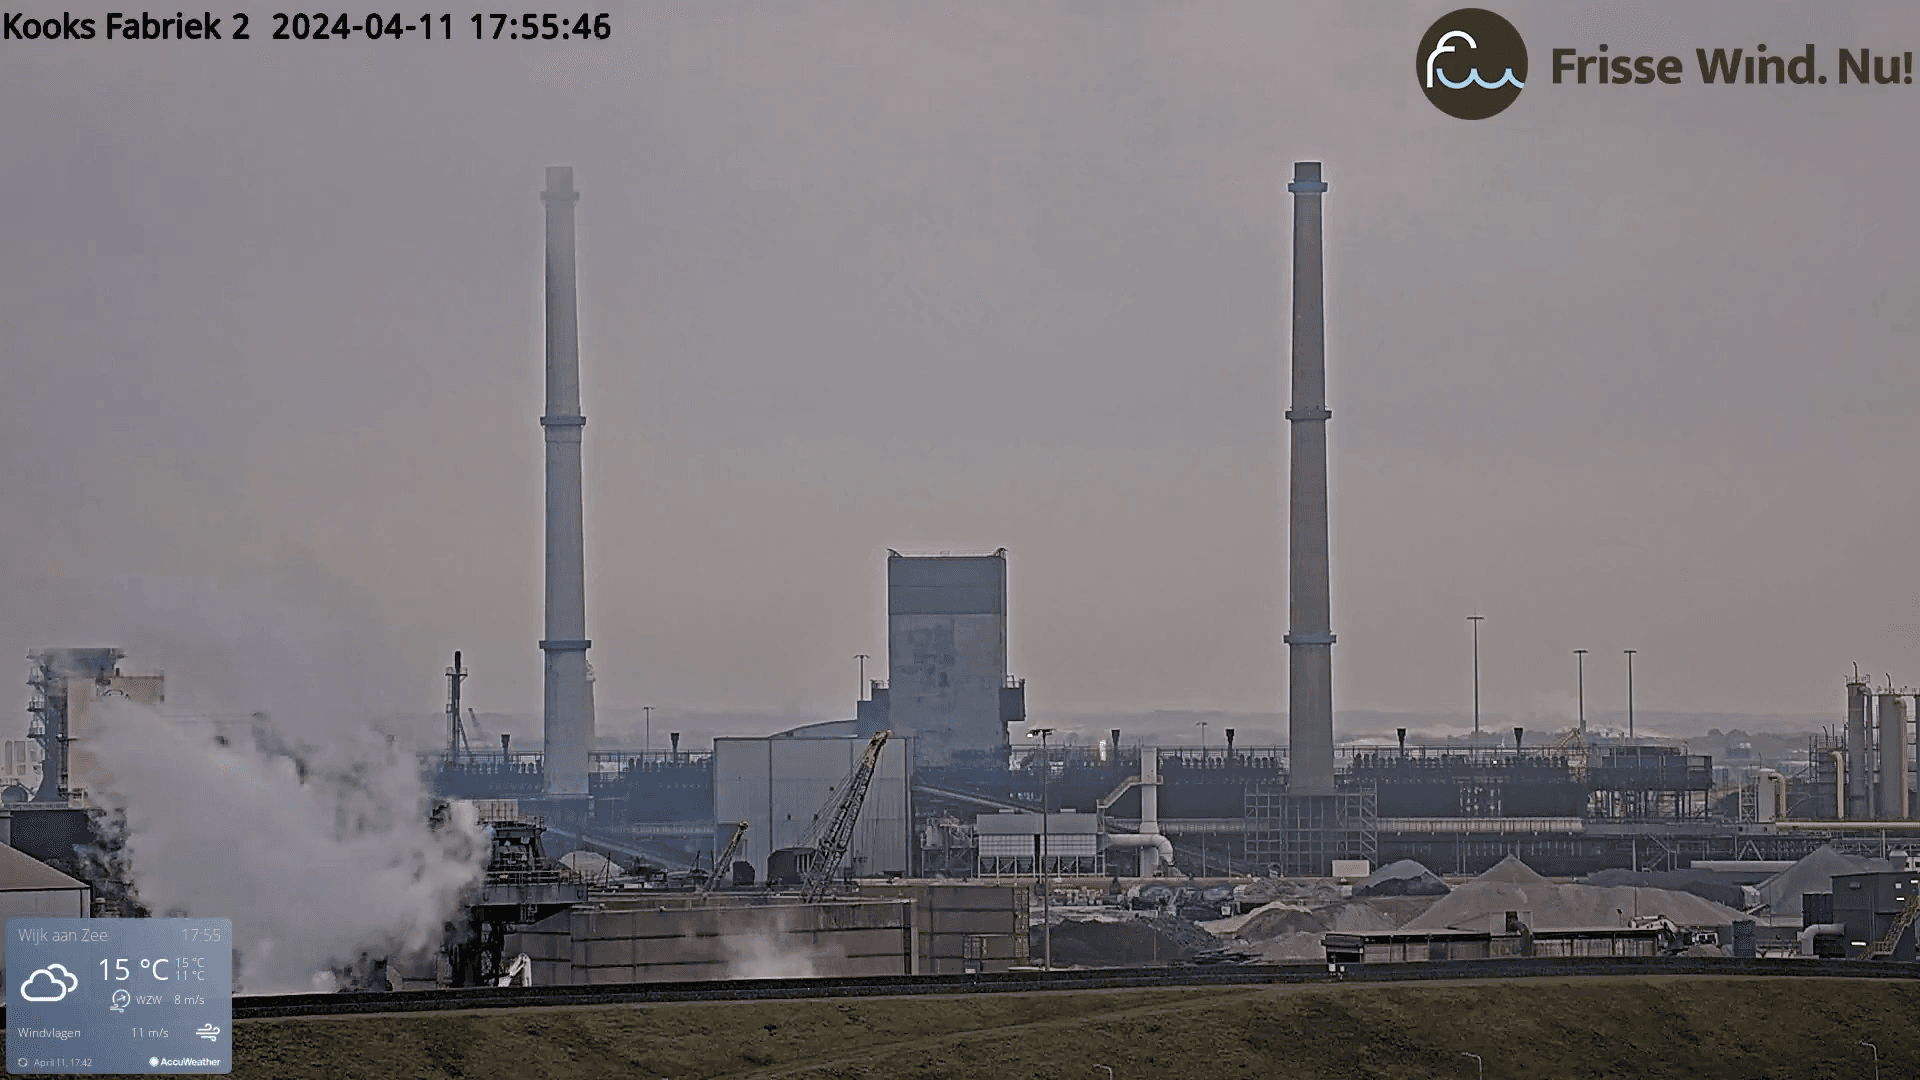 Combustion, Kooks Fabriek 2 https://www.youtube.com/watch?v=znI_4auSvBE&ab_channel=FrisseWindNu (4:33)